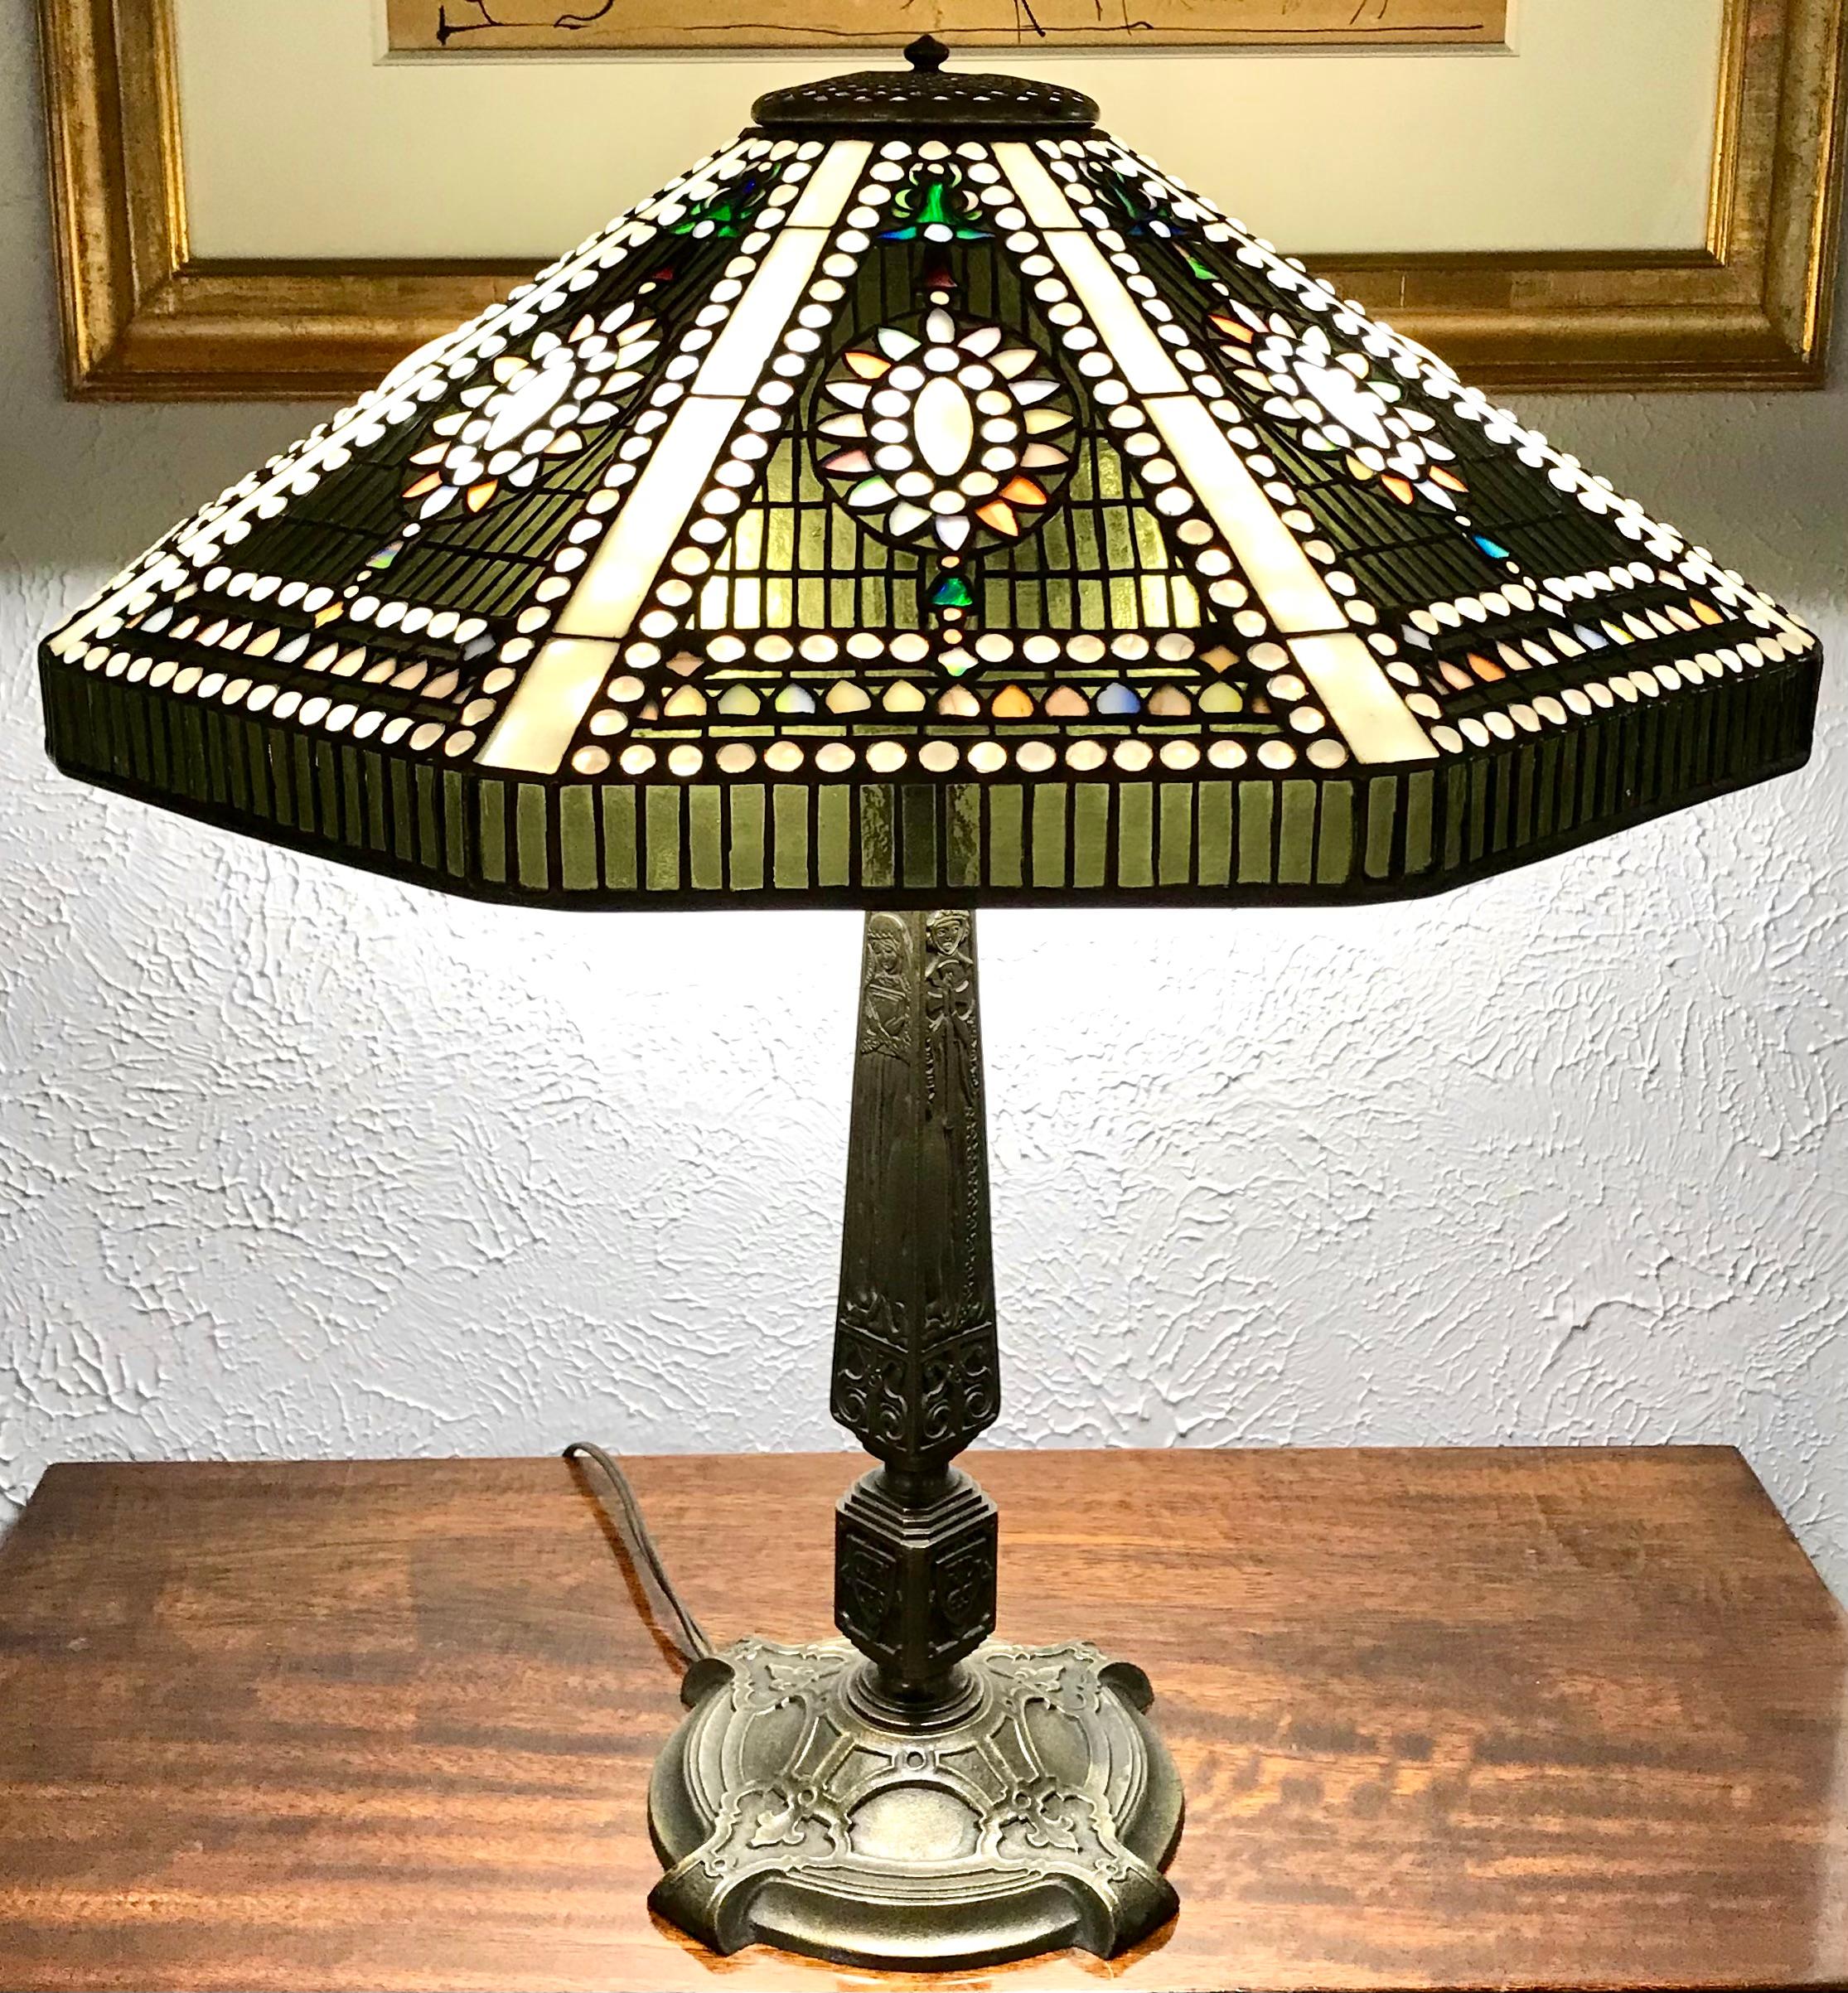 Lampe de table Empire Jewel de Tiffany Studios

Importante et rare lampe de table 